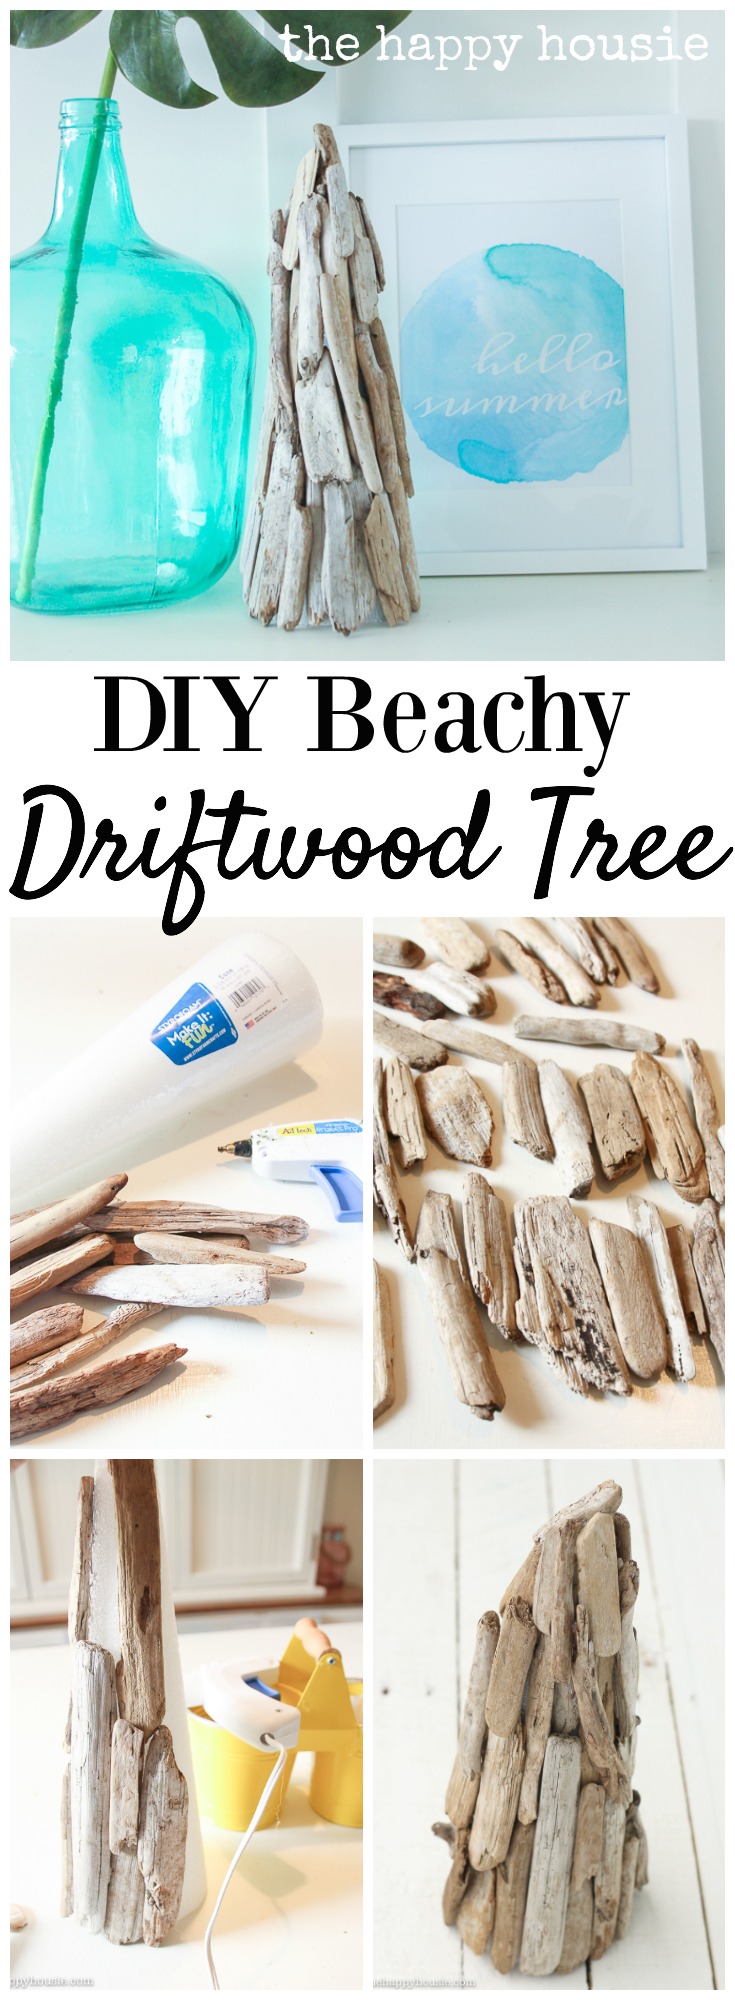 DIY driftwood tree poster.